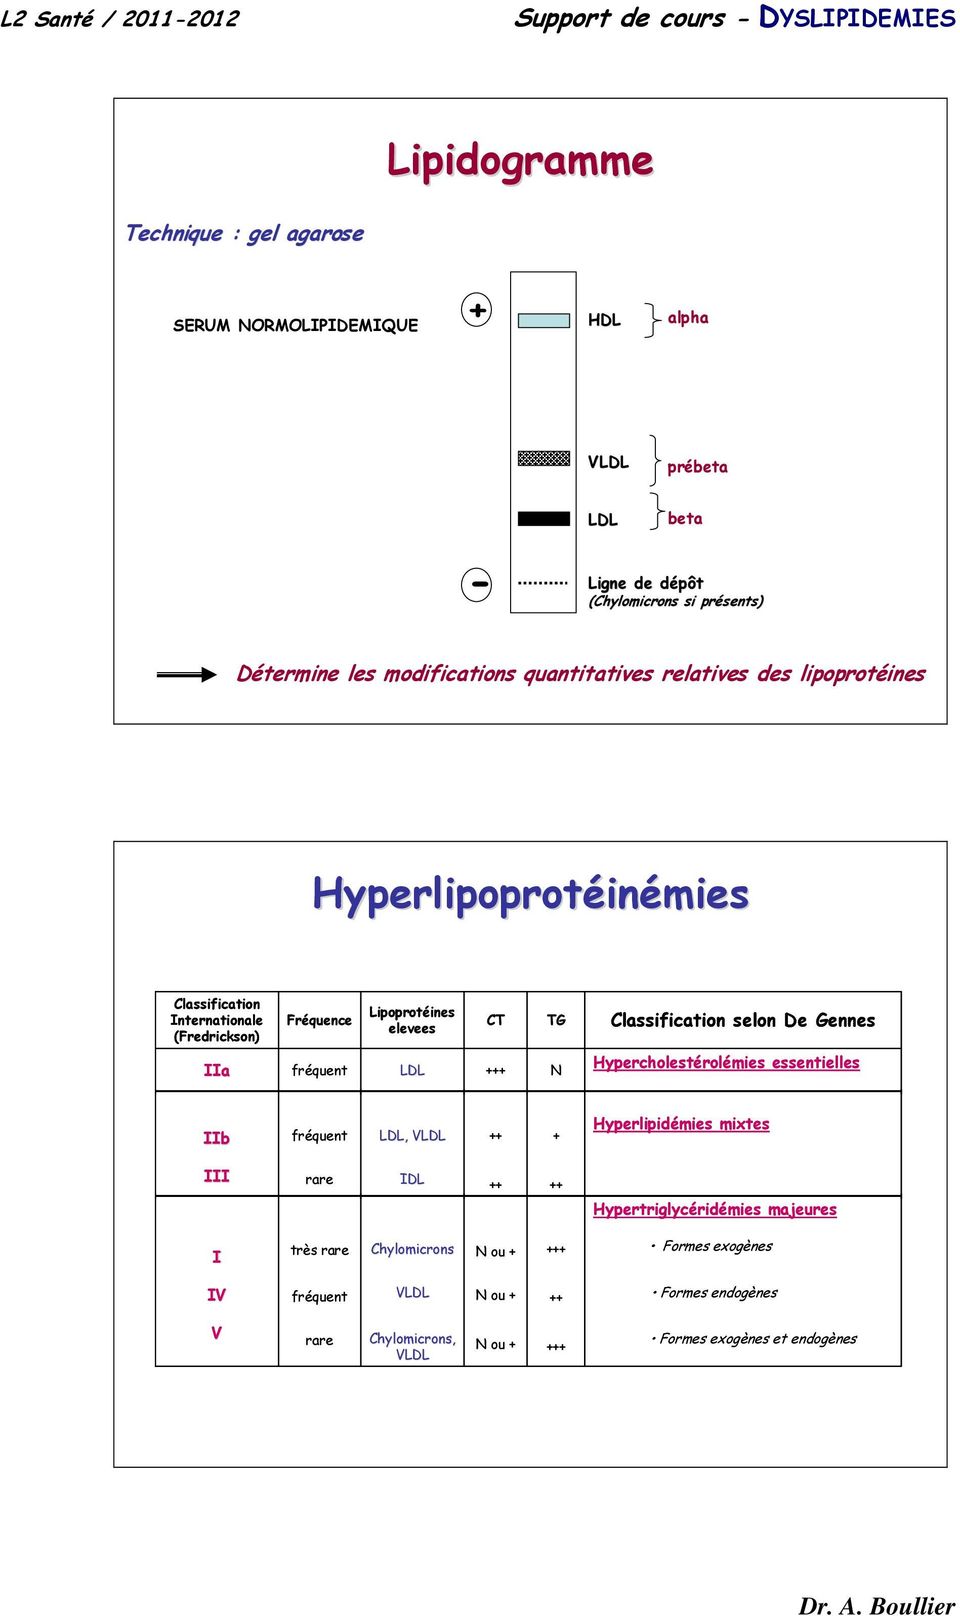 Classification selon De Gennes IIa fréquent +++ N Hypercholestérolémies essentielles IIb fréquent, V ++ + Hyperlipidémies mixtes III rare IDL ++ ++